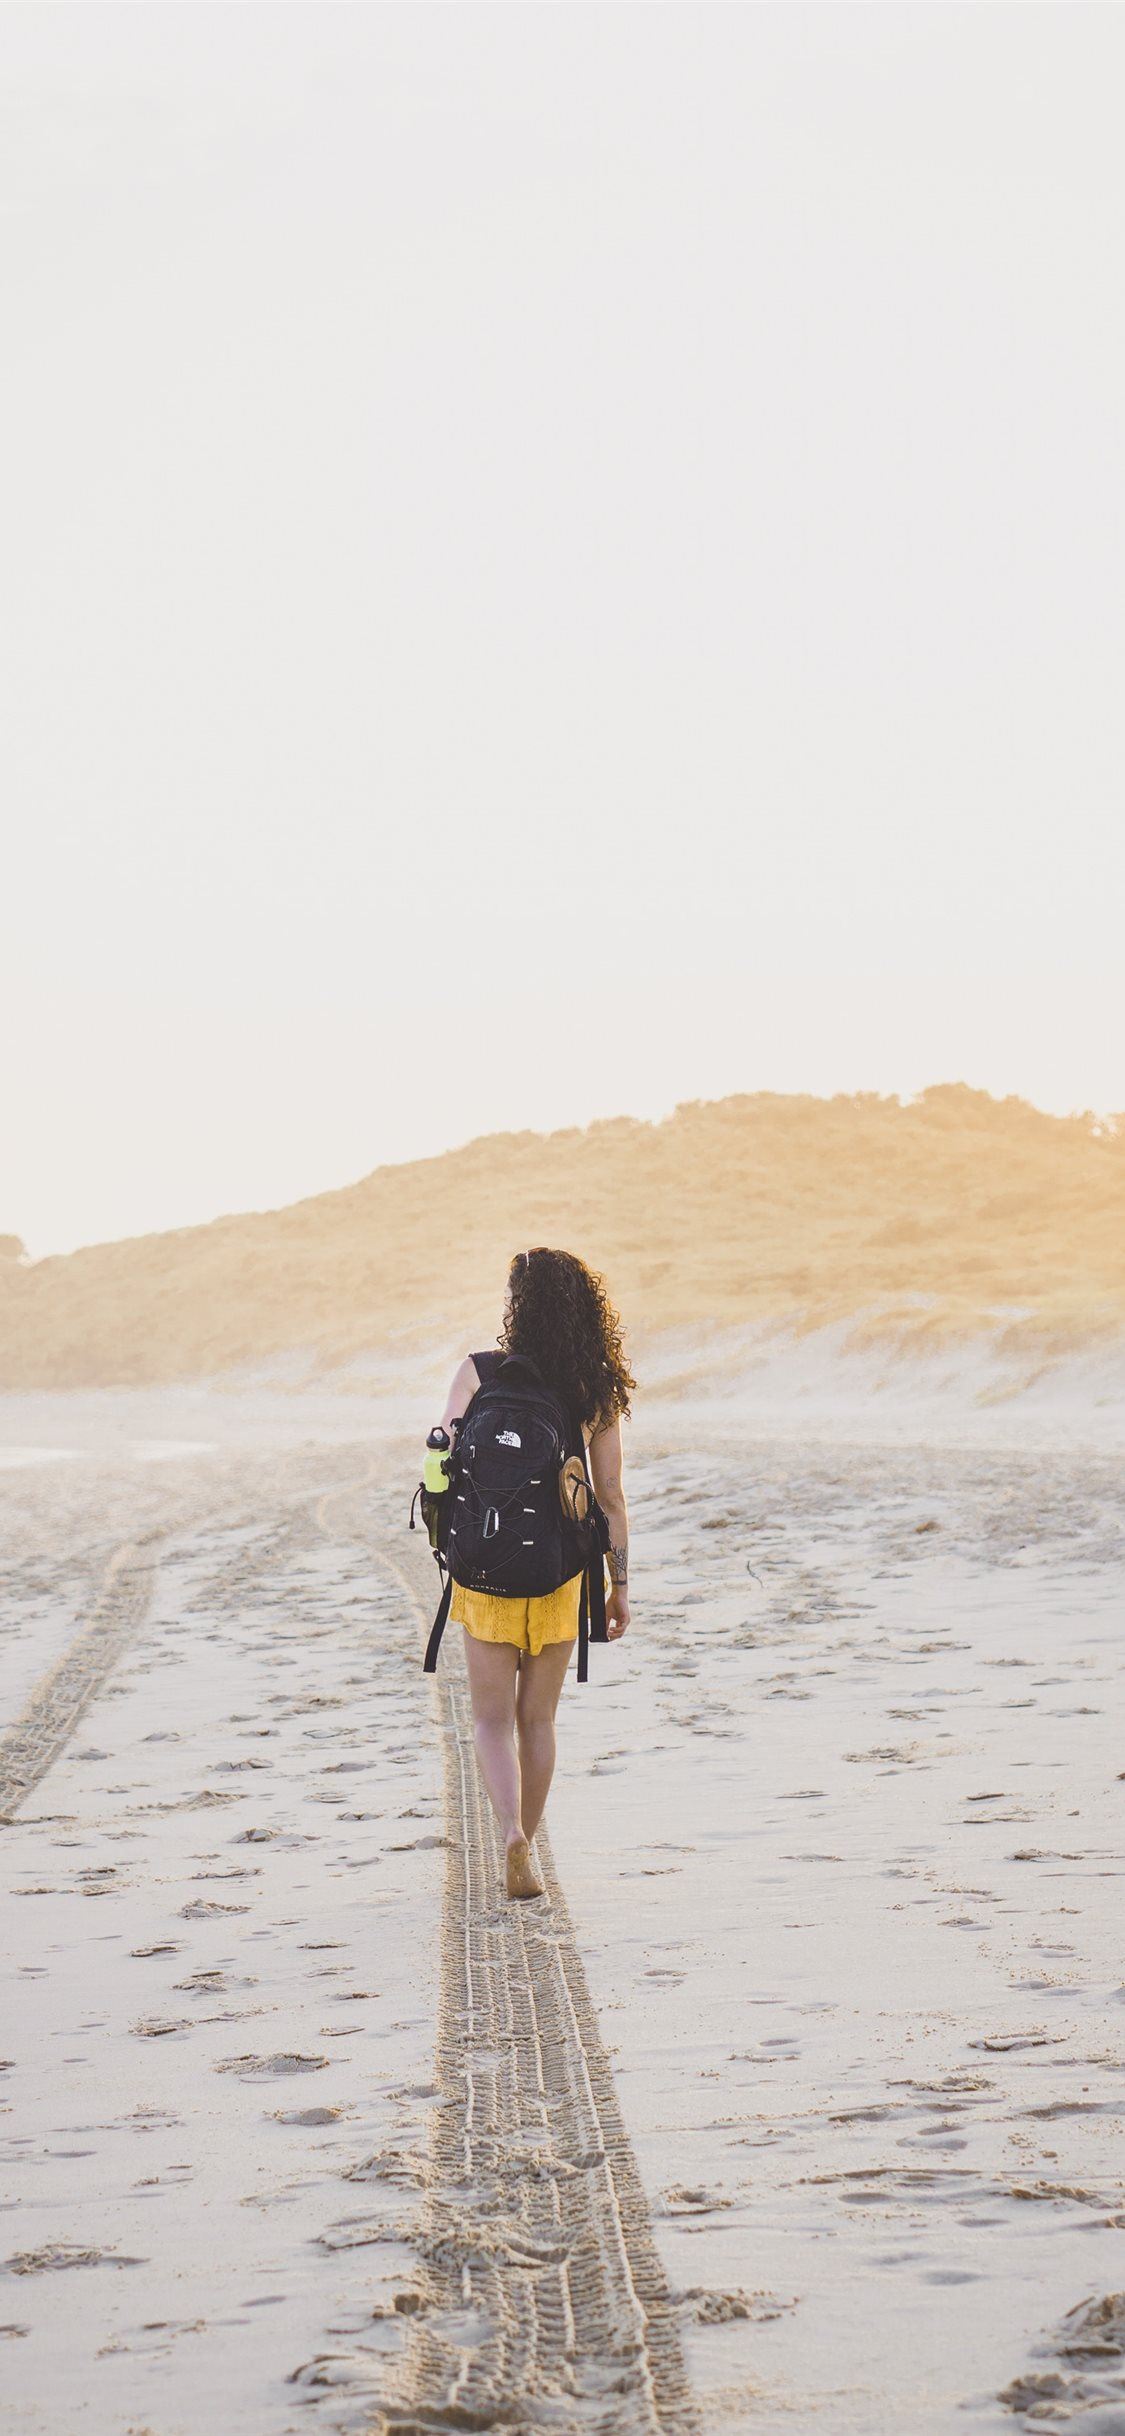 Sunset Beach Girl Walking Australia Day iPhone SE Wallpapers Free Download